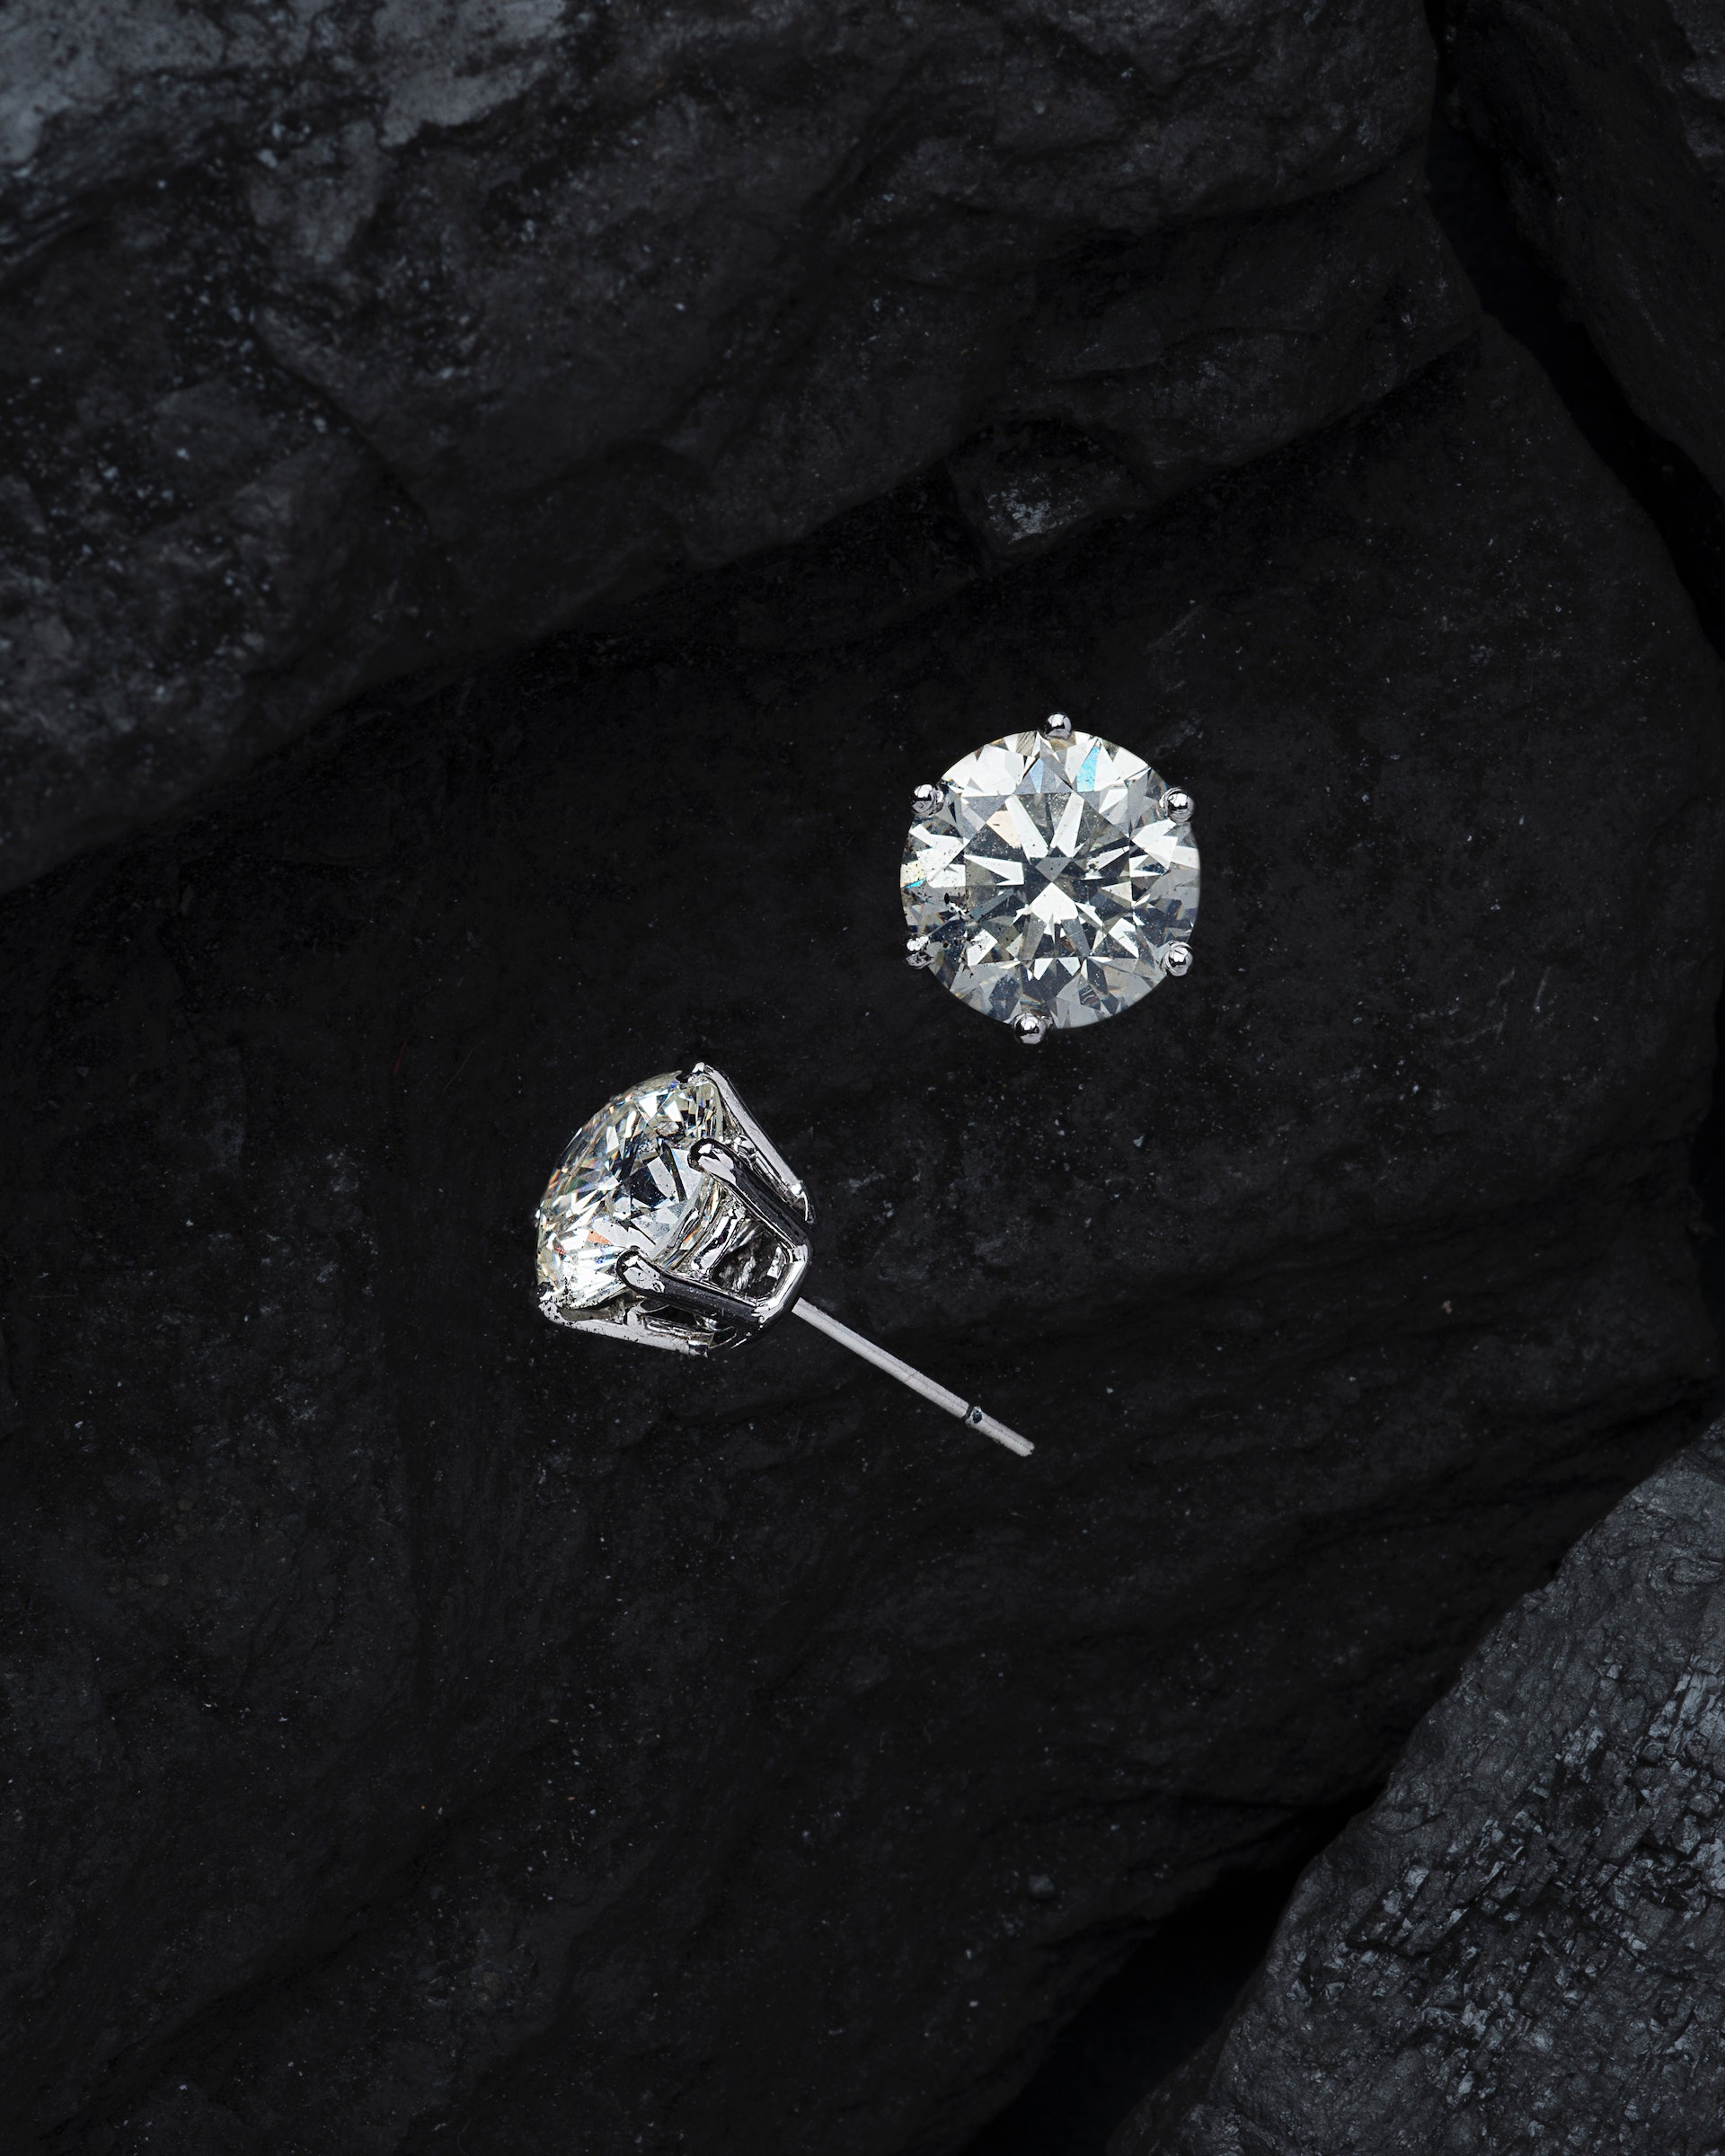 Close-up of diamond stud earrings | Source: Pexels